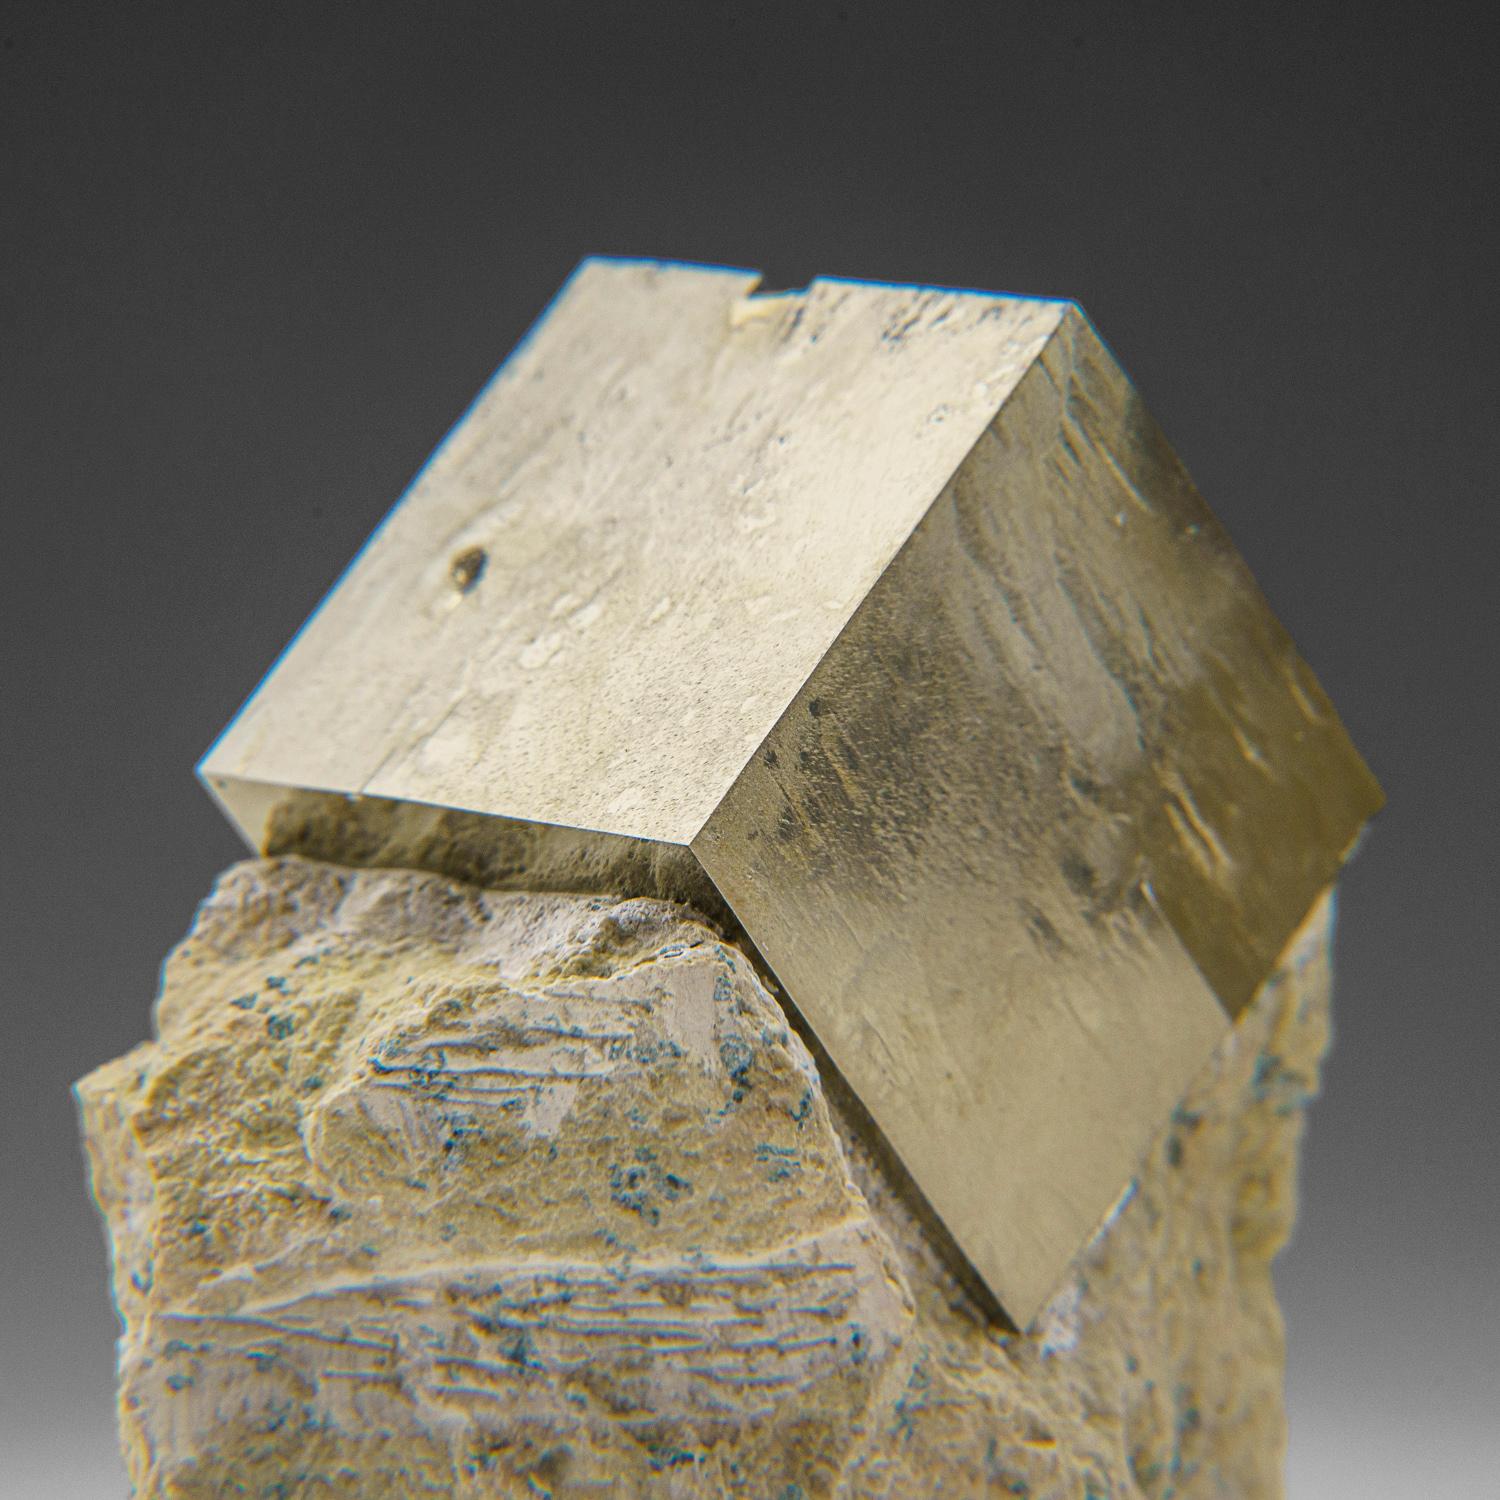 Contemporary Pyrite Cube on Basalt from Navajún, La Rioja Province, Spain (1.4 lbs) For Sale